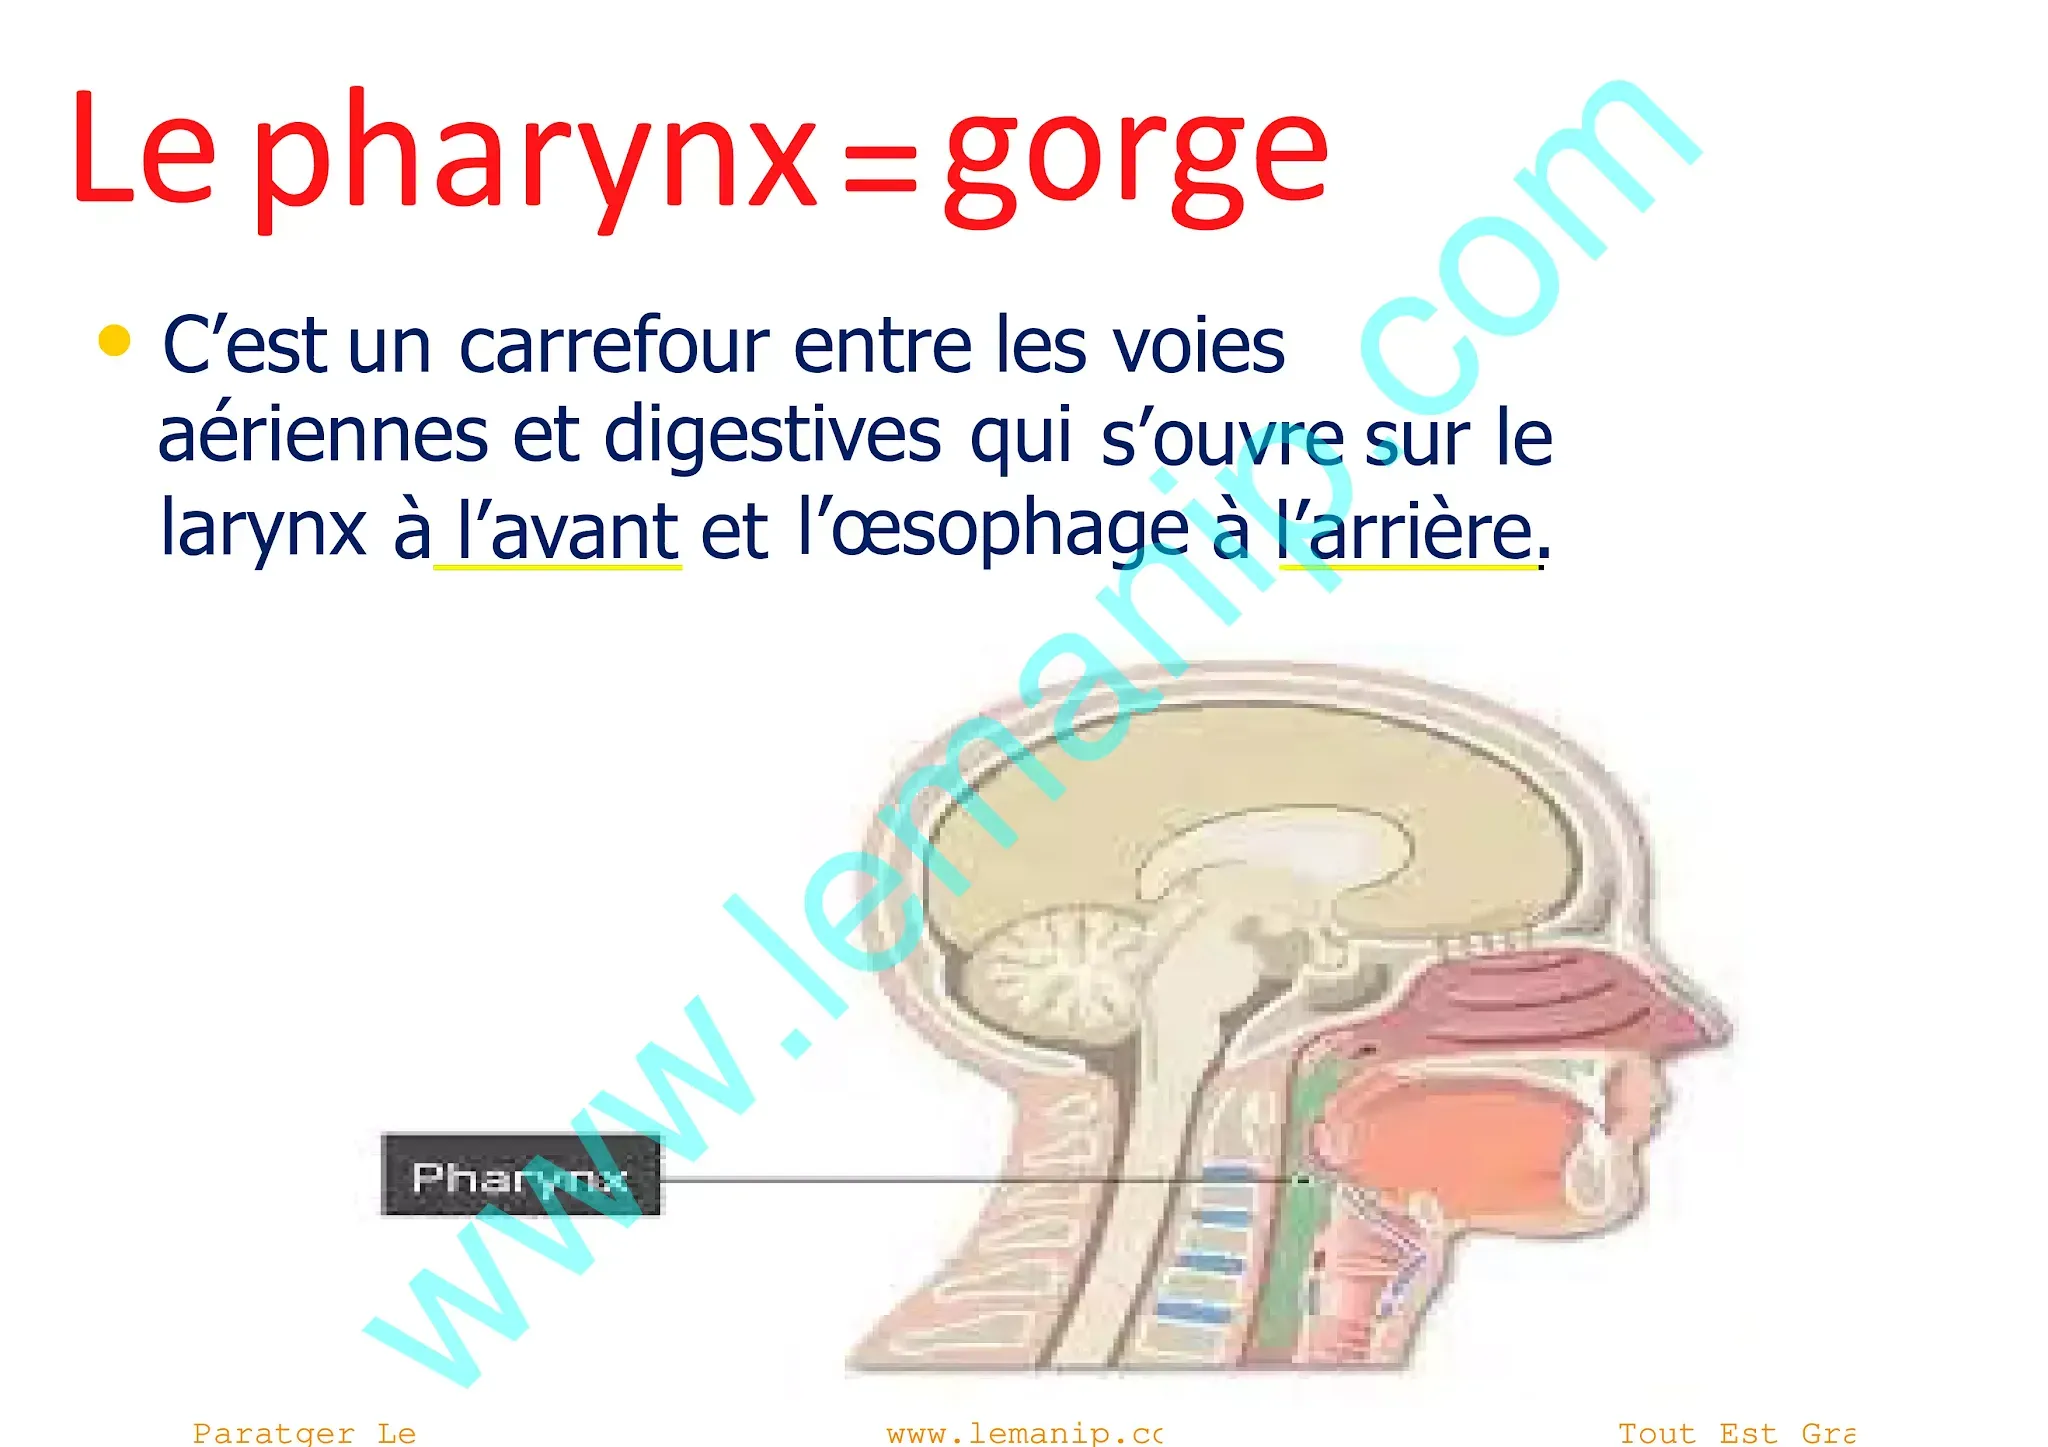 Pharynx = gorge